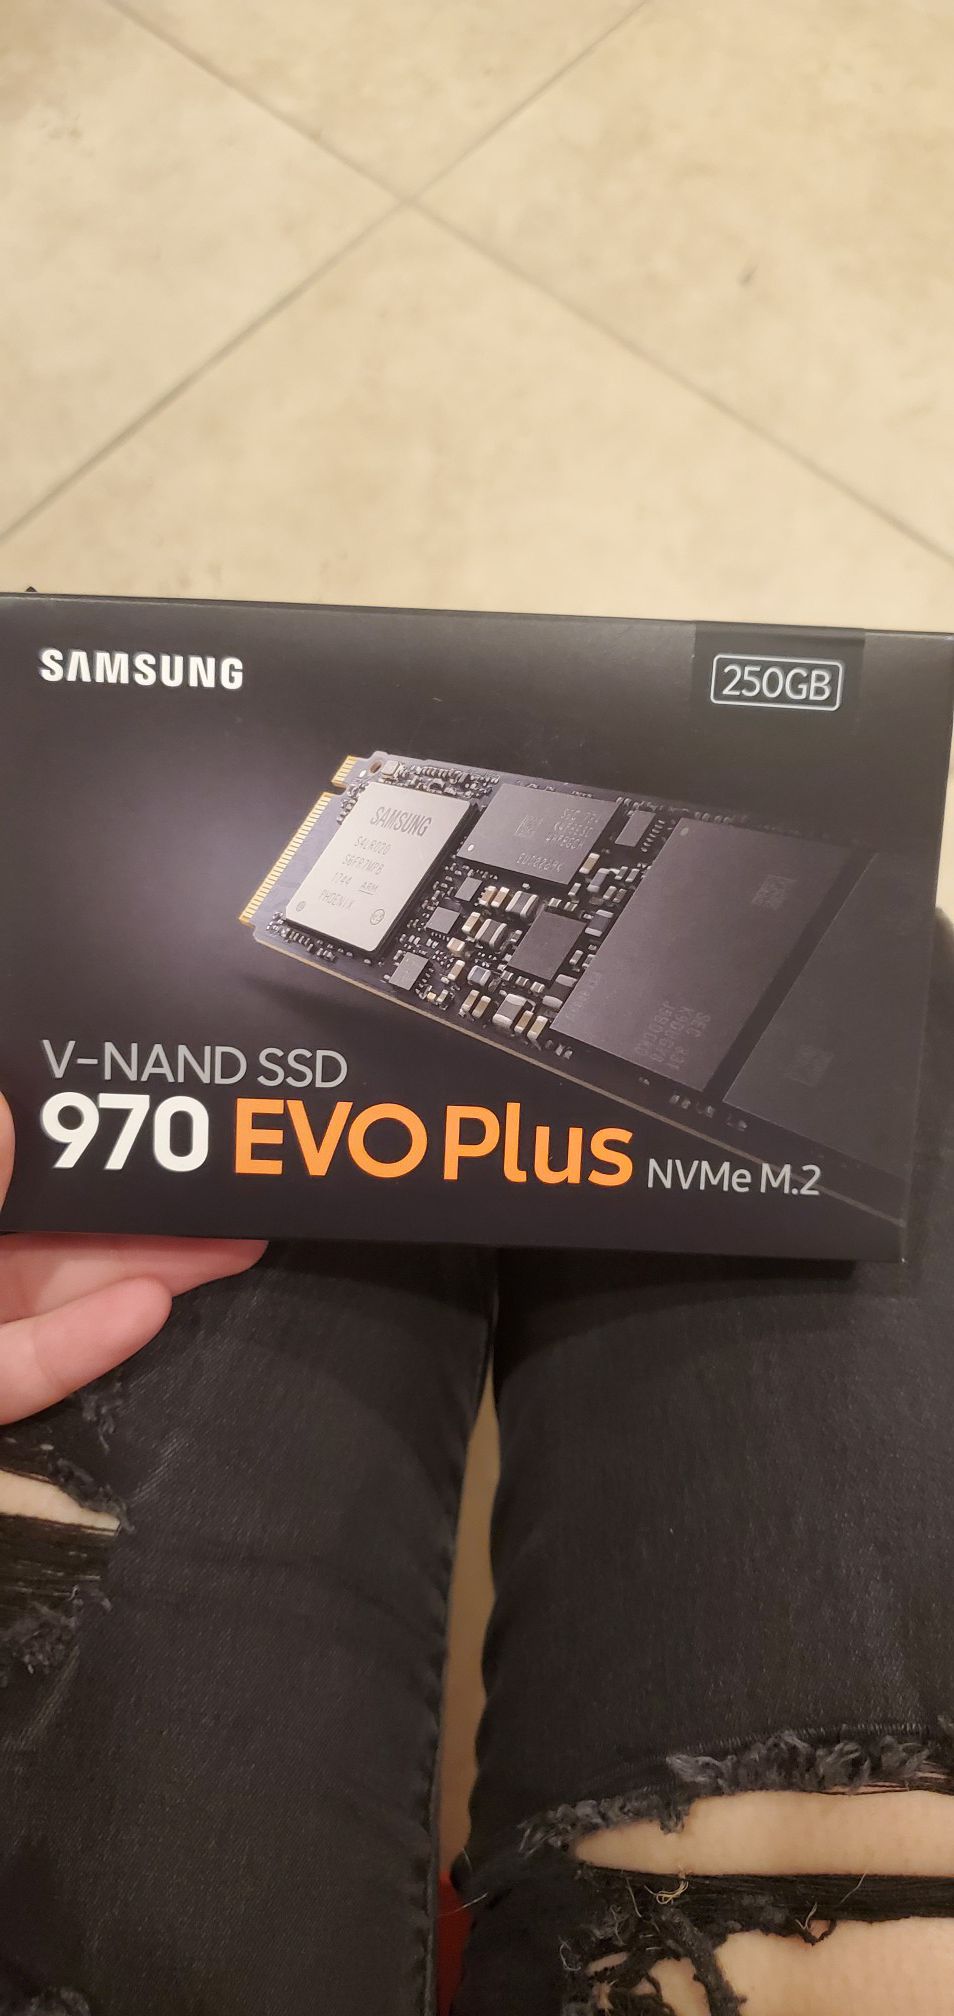 Samsung V Nand SSD 970 Evo Plus M.2 250GB